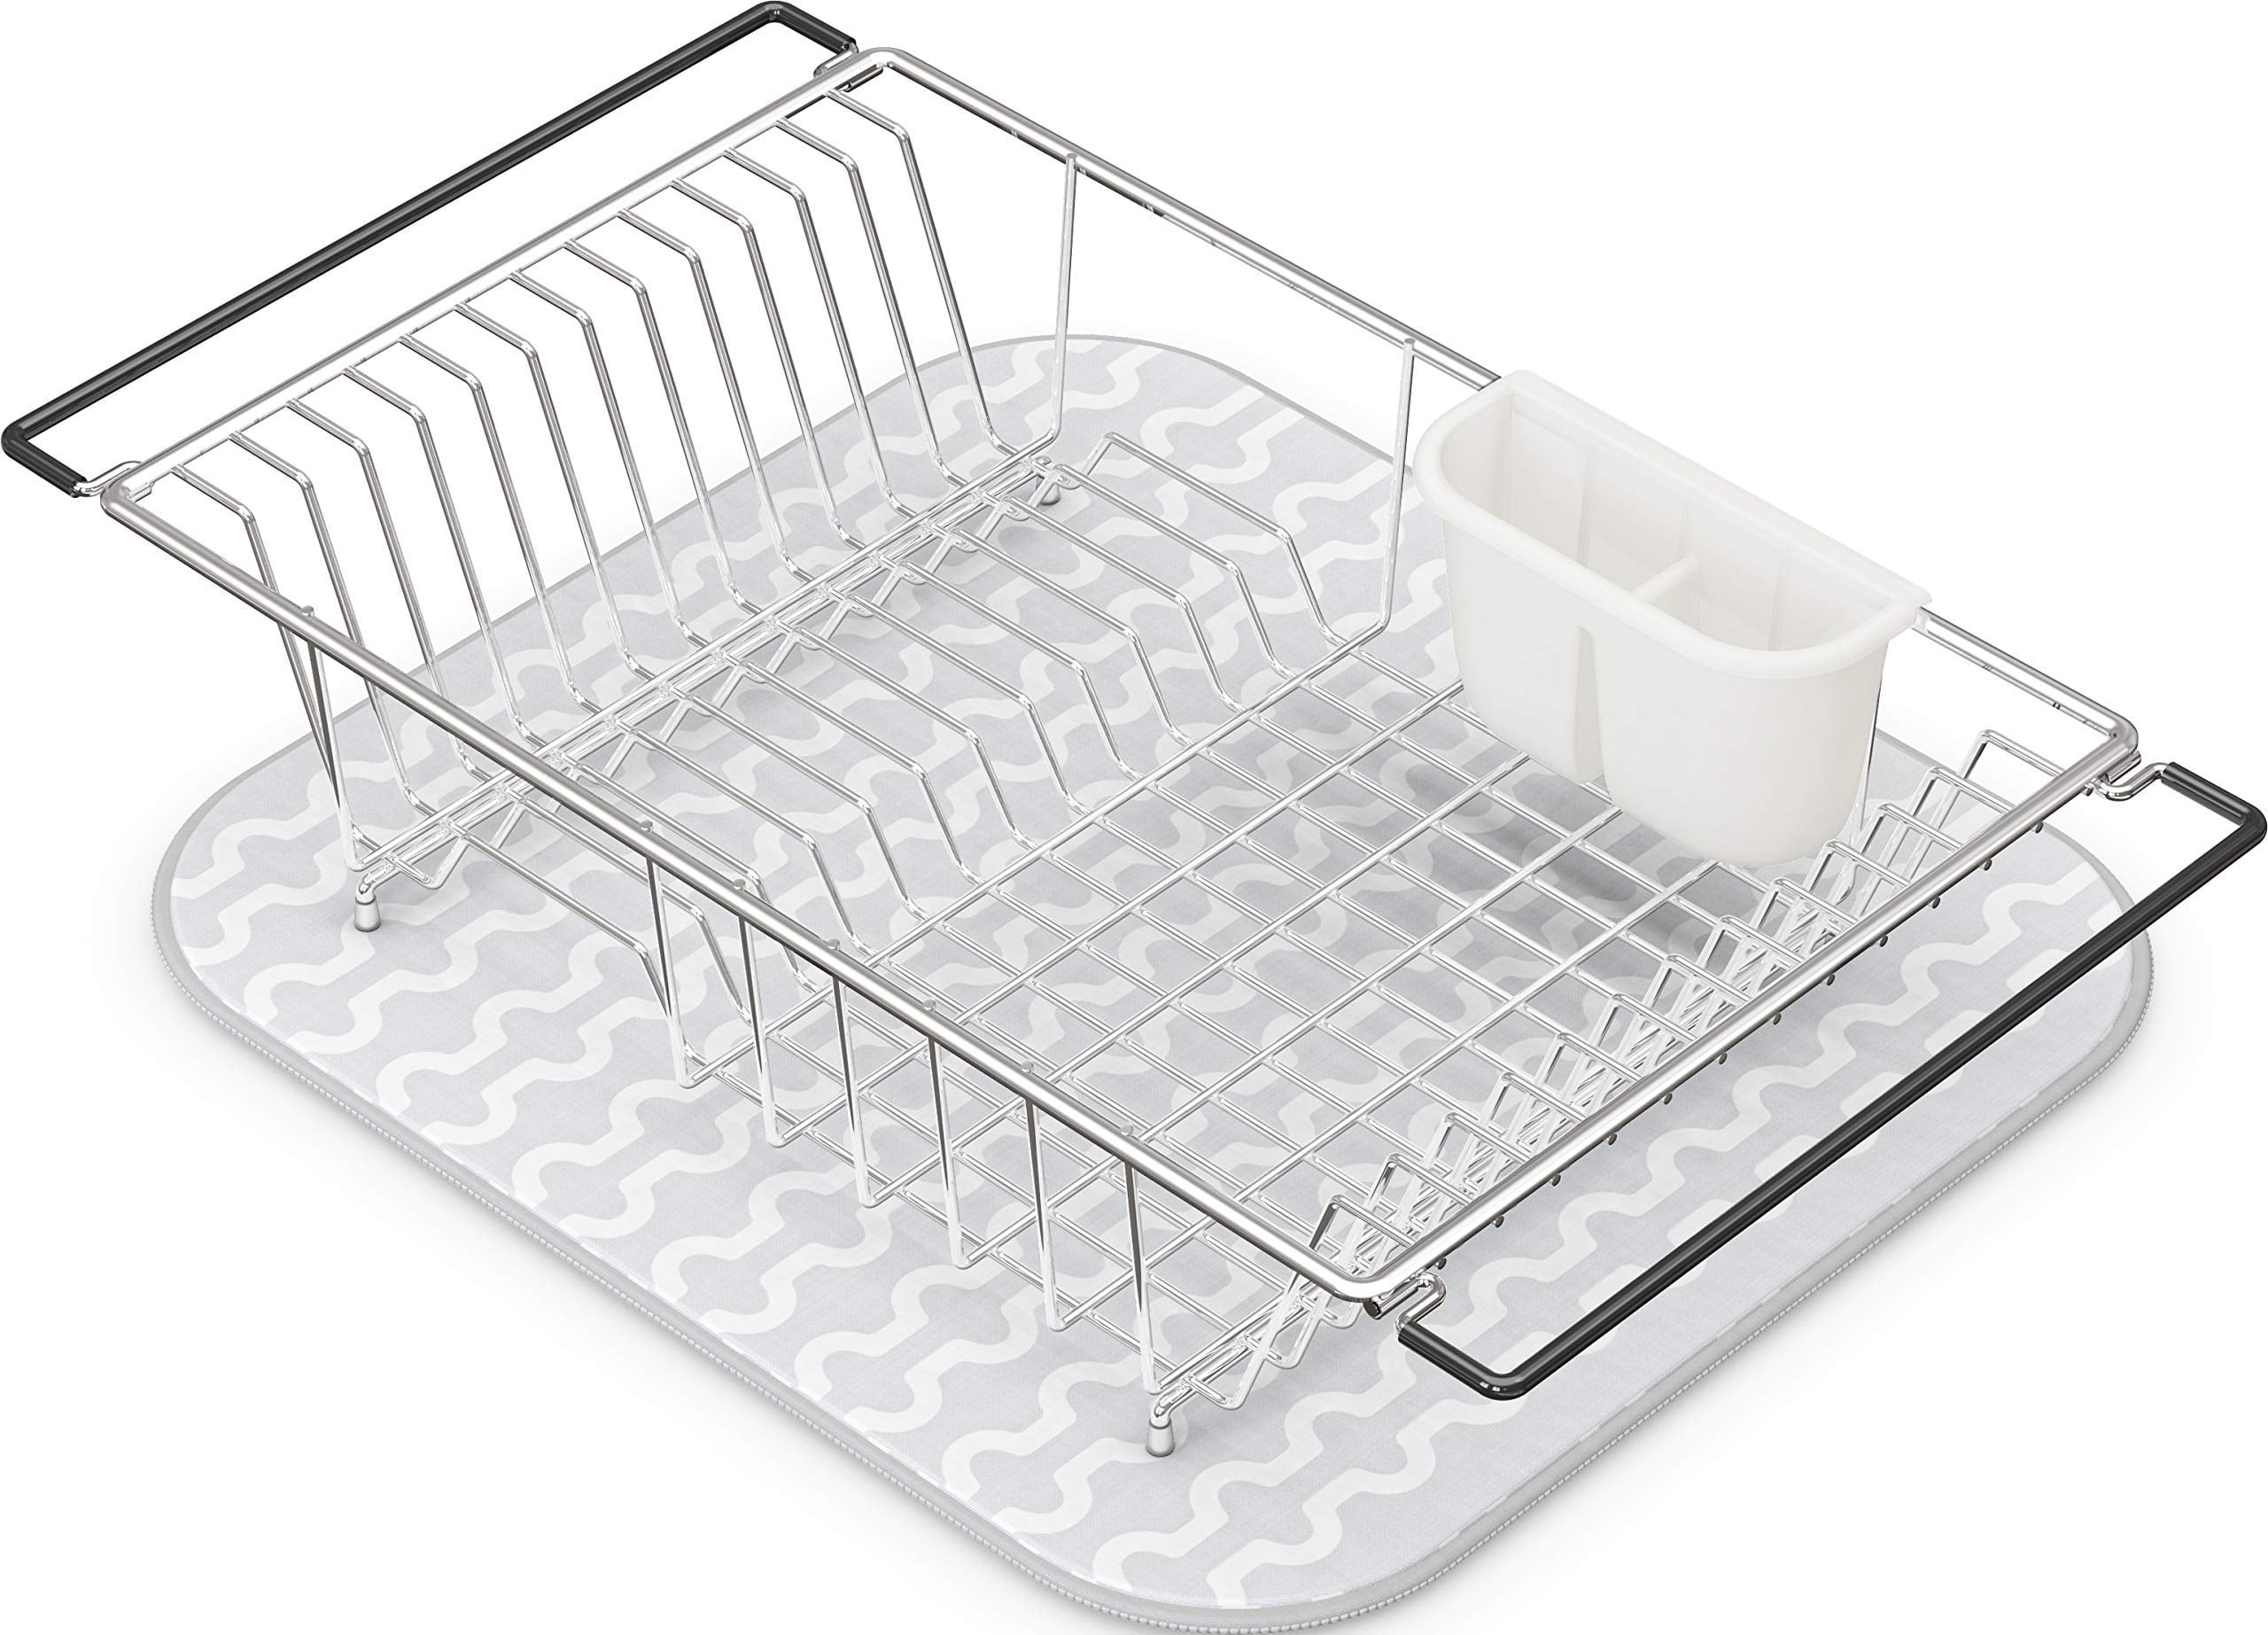 plastic over sink dish drying racks